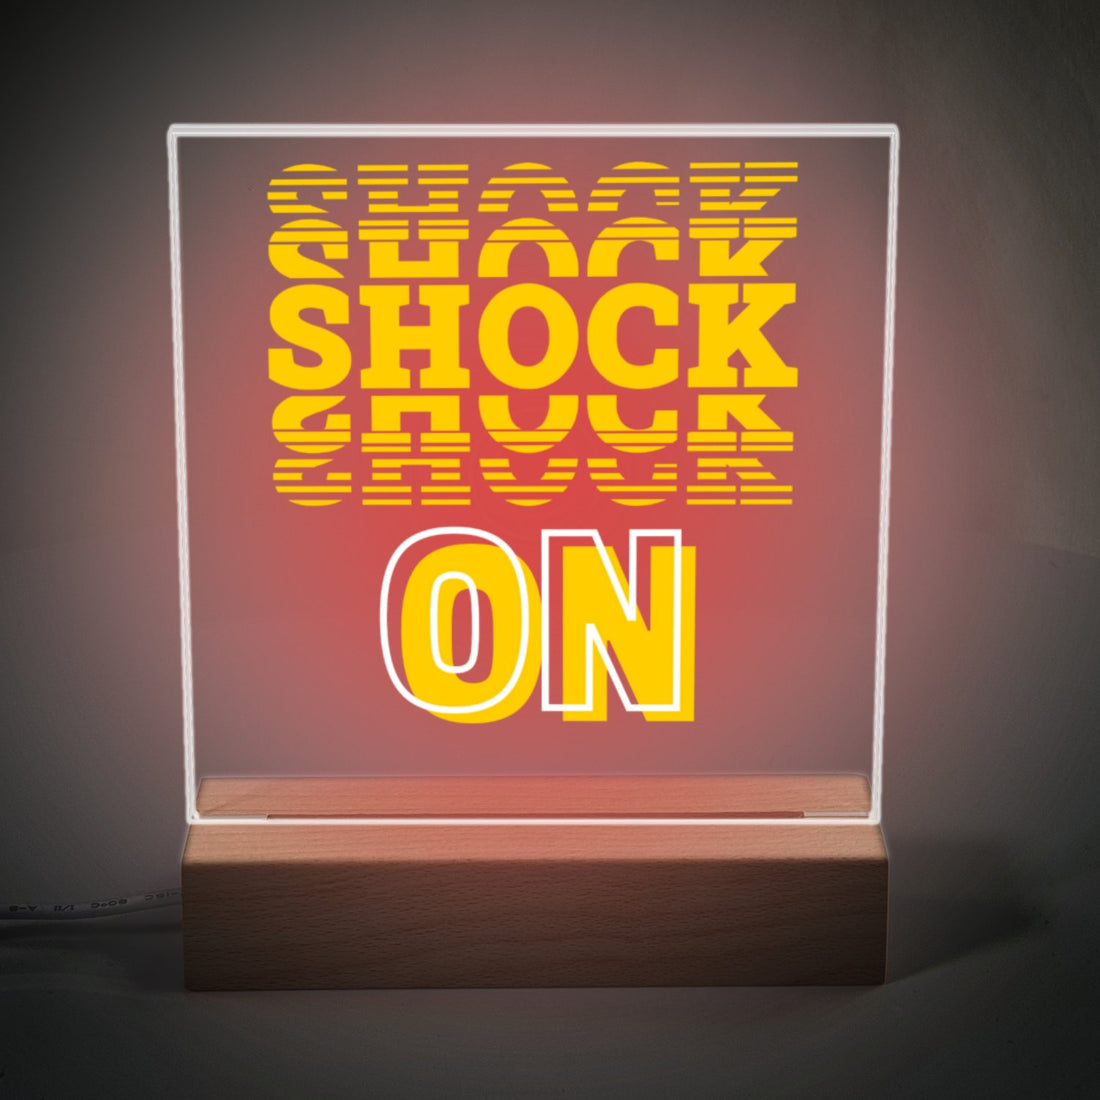 Wichita Shock On Plaque - Positively Sassy - Wichita Shock On Plaque